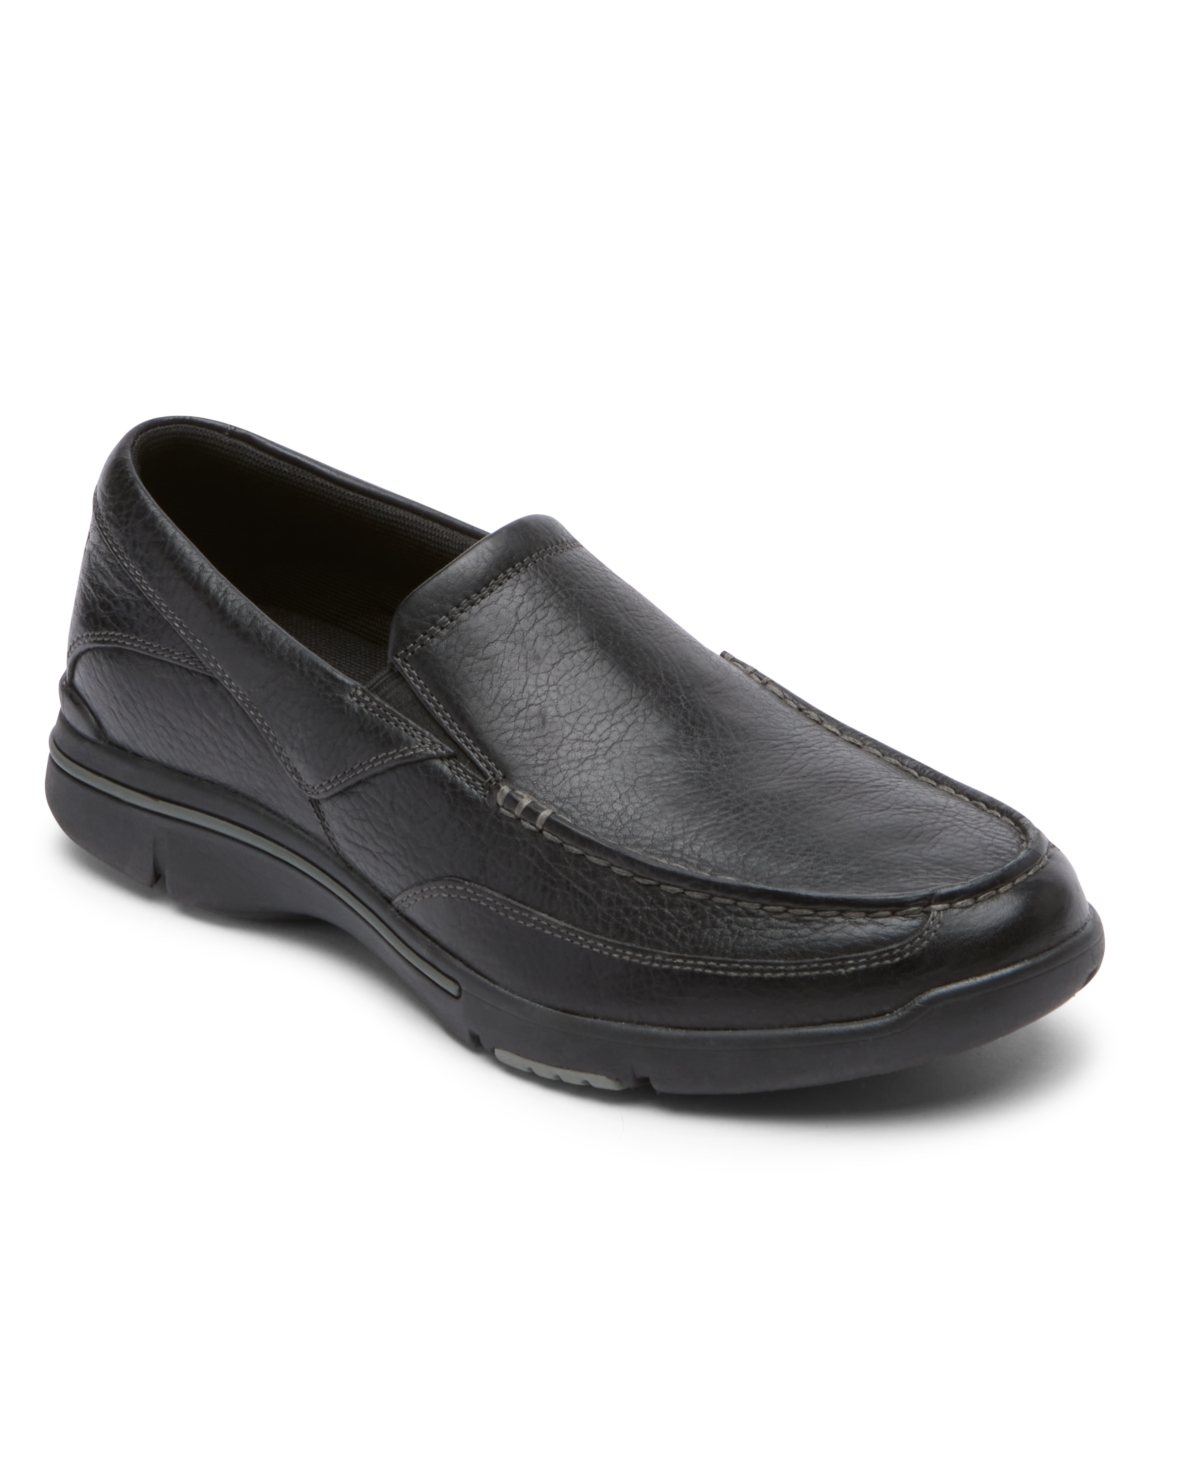 Men's Eberdon Slip On Shoes - Black